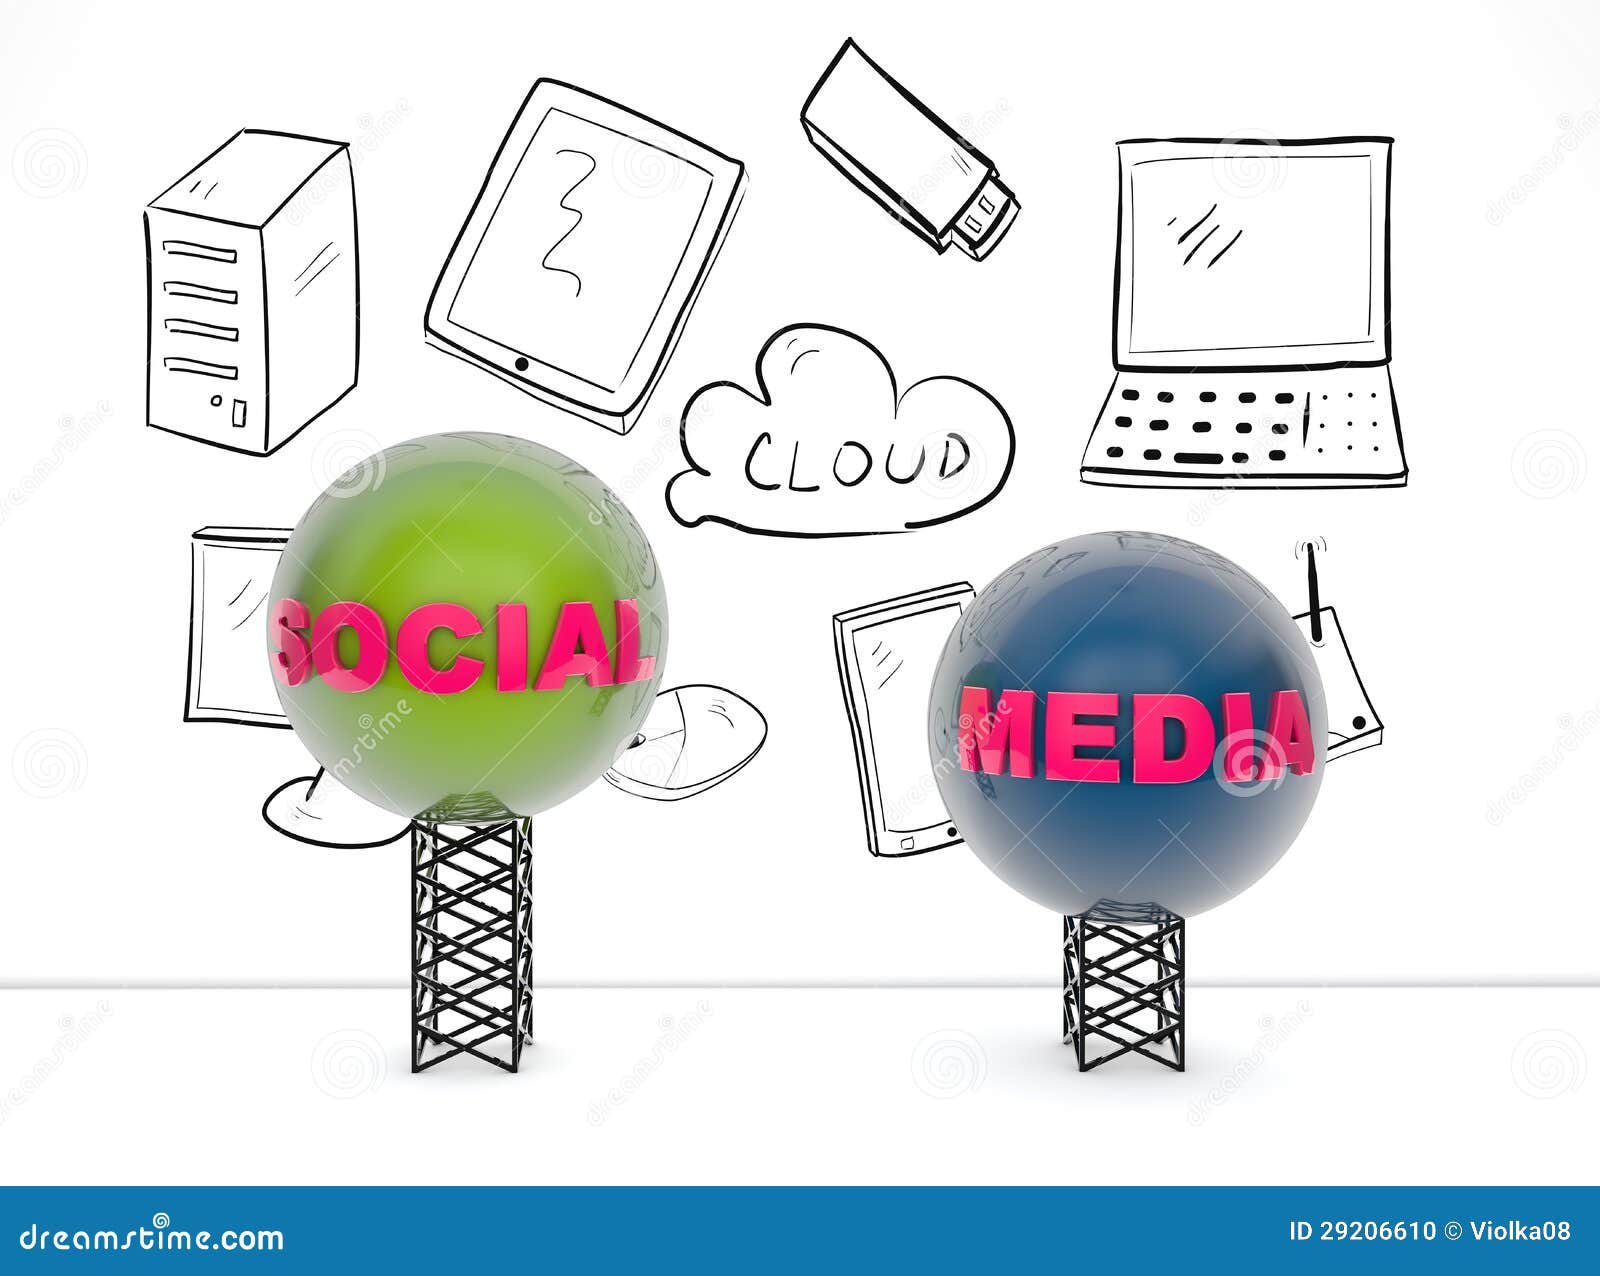 Social Media Concept Stock Photo - Image: 29206610